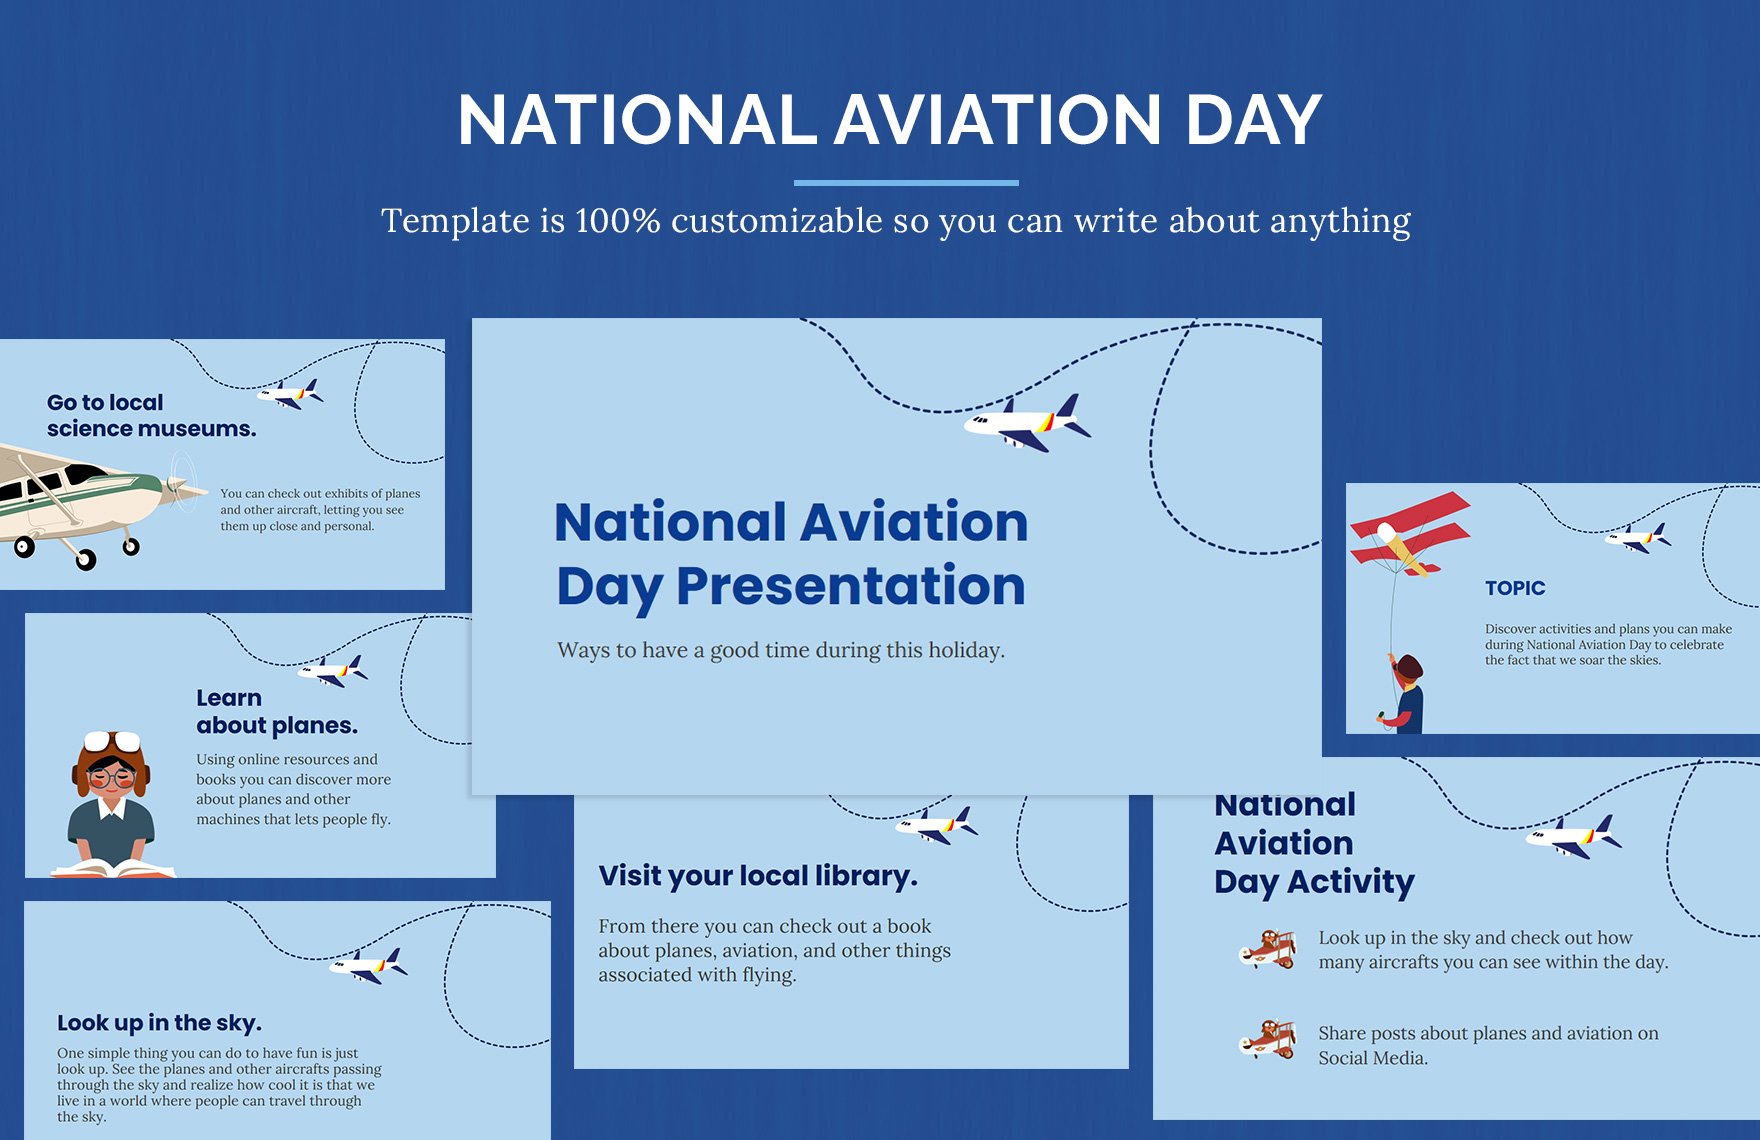 National Aviation Day Presentation Template